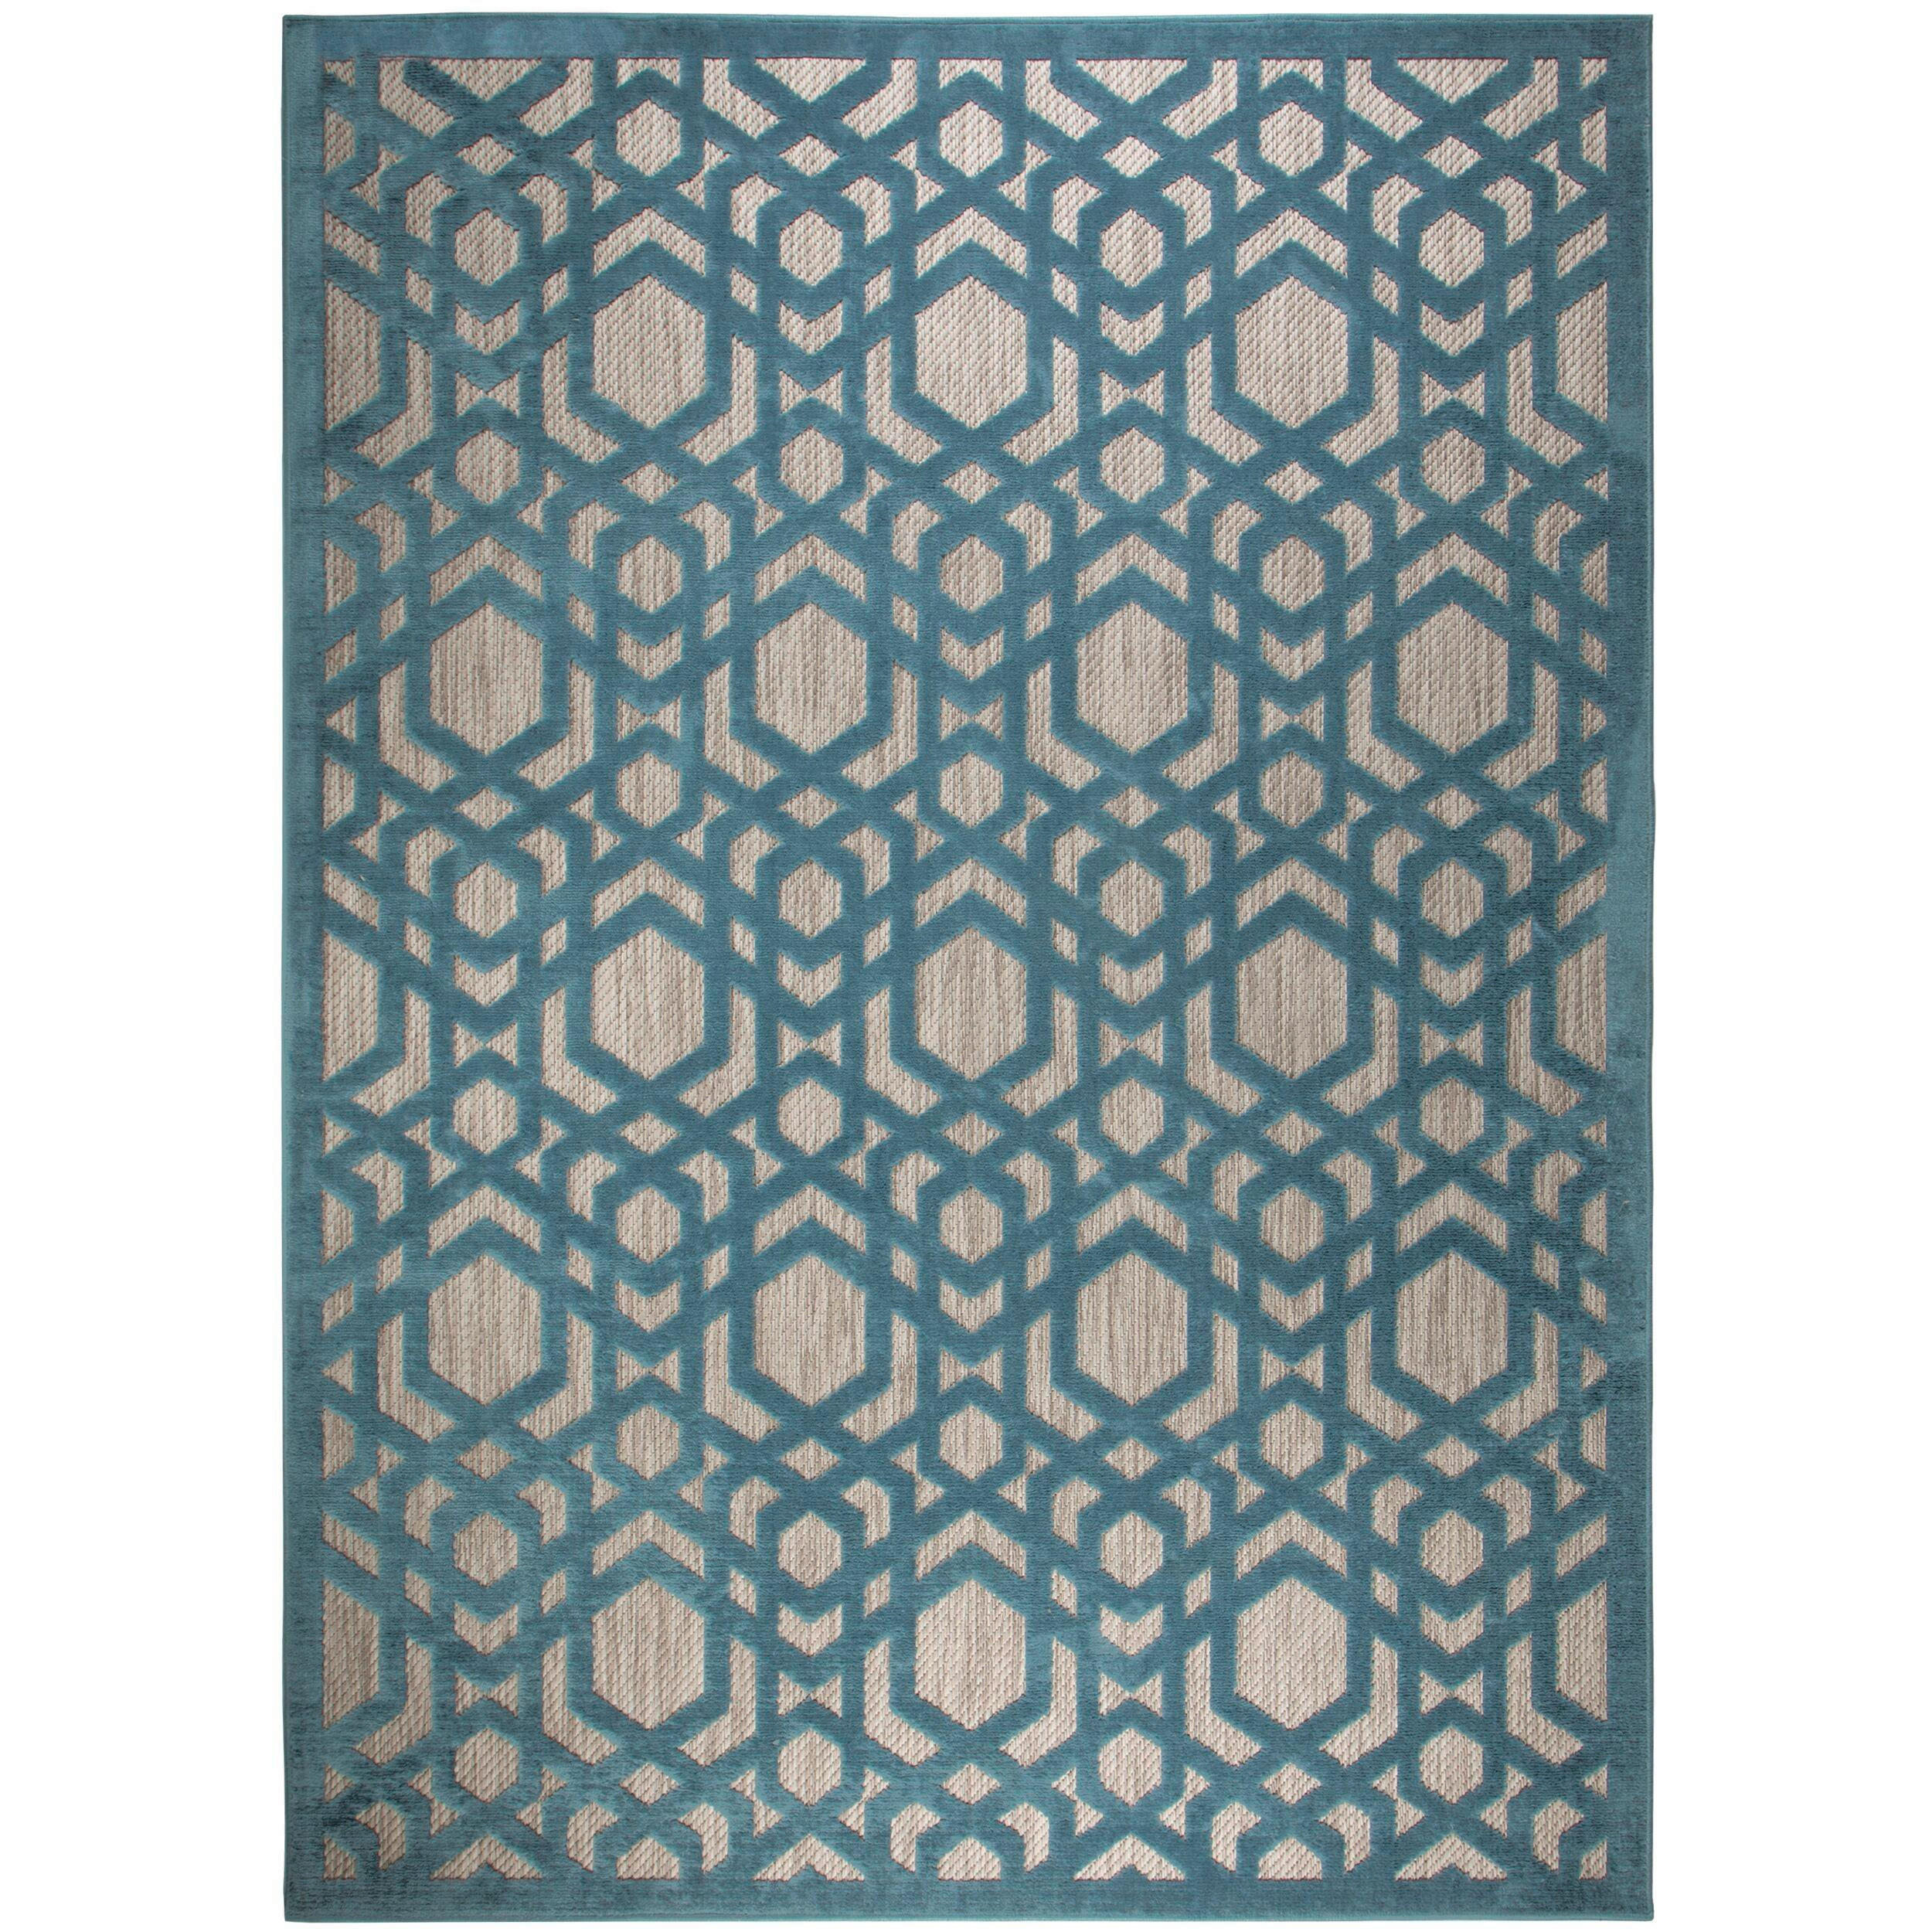 VENKOVNÍ KOBEREC, 80/150 cm, modrá - modrá - textil